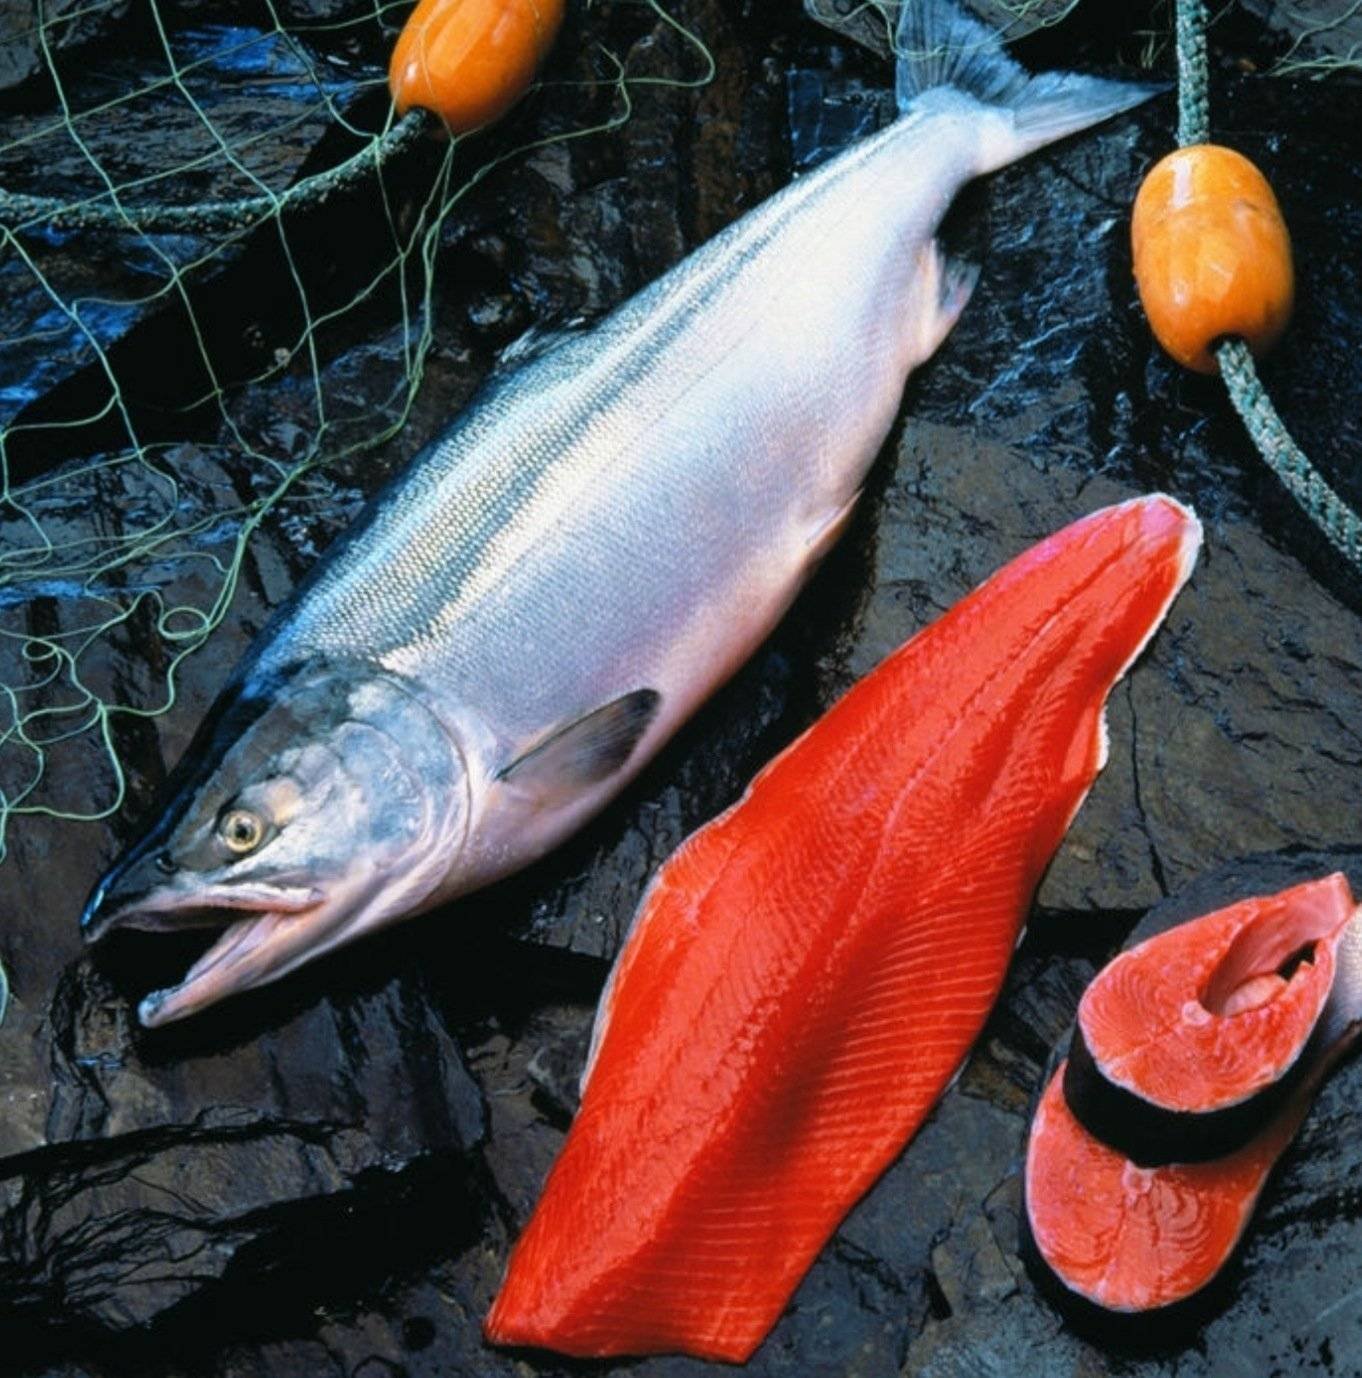 Красная рыба в реке. Чавыча Oncorhynchus tshawytscha. Королевский лосось чавыча. Чавыча дикий лосось. Лосось кижуч.